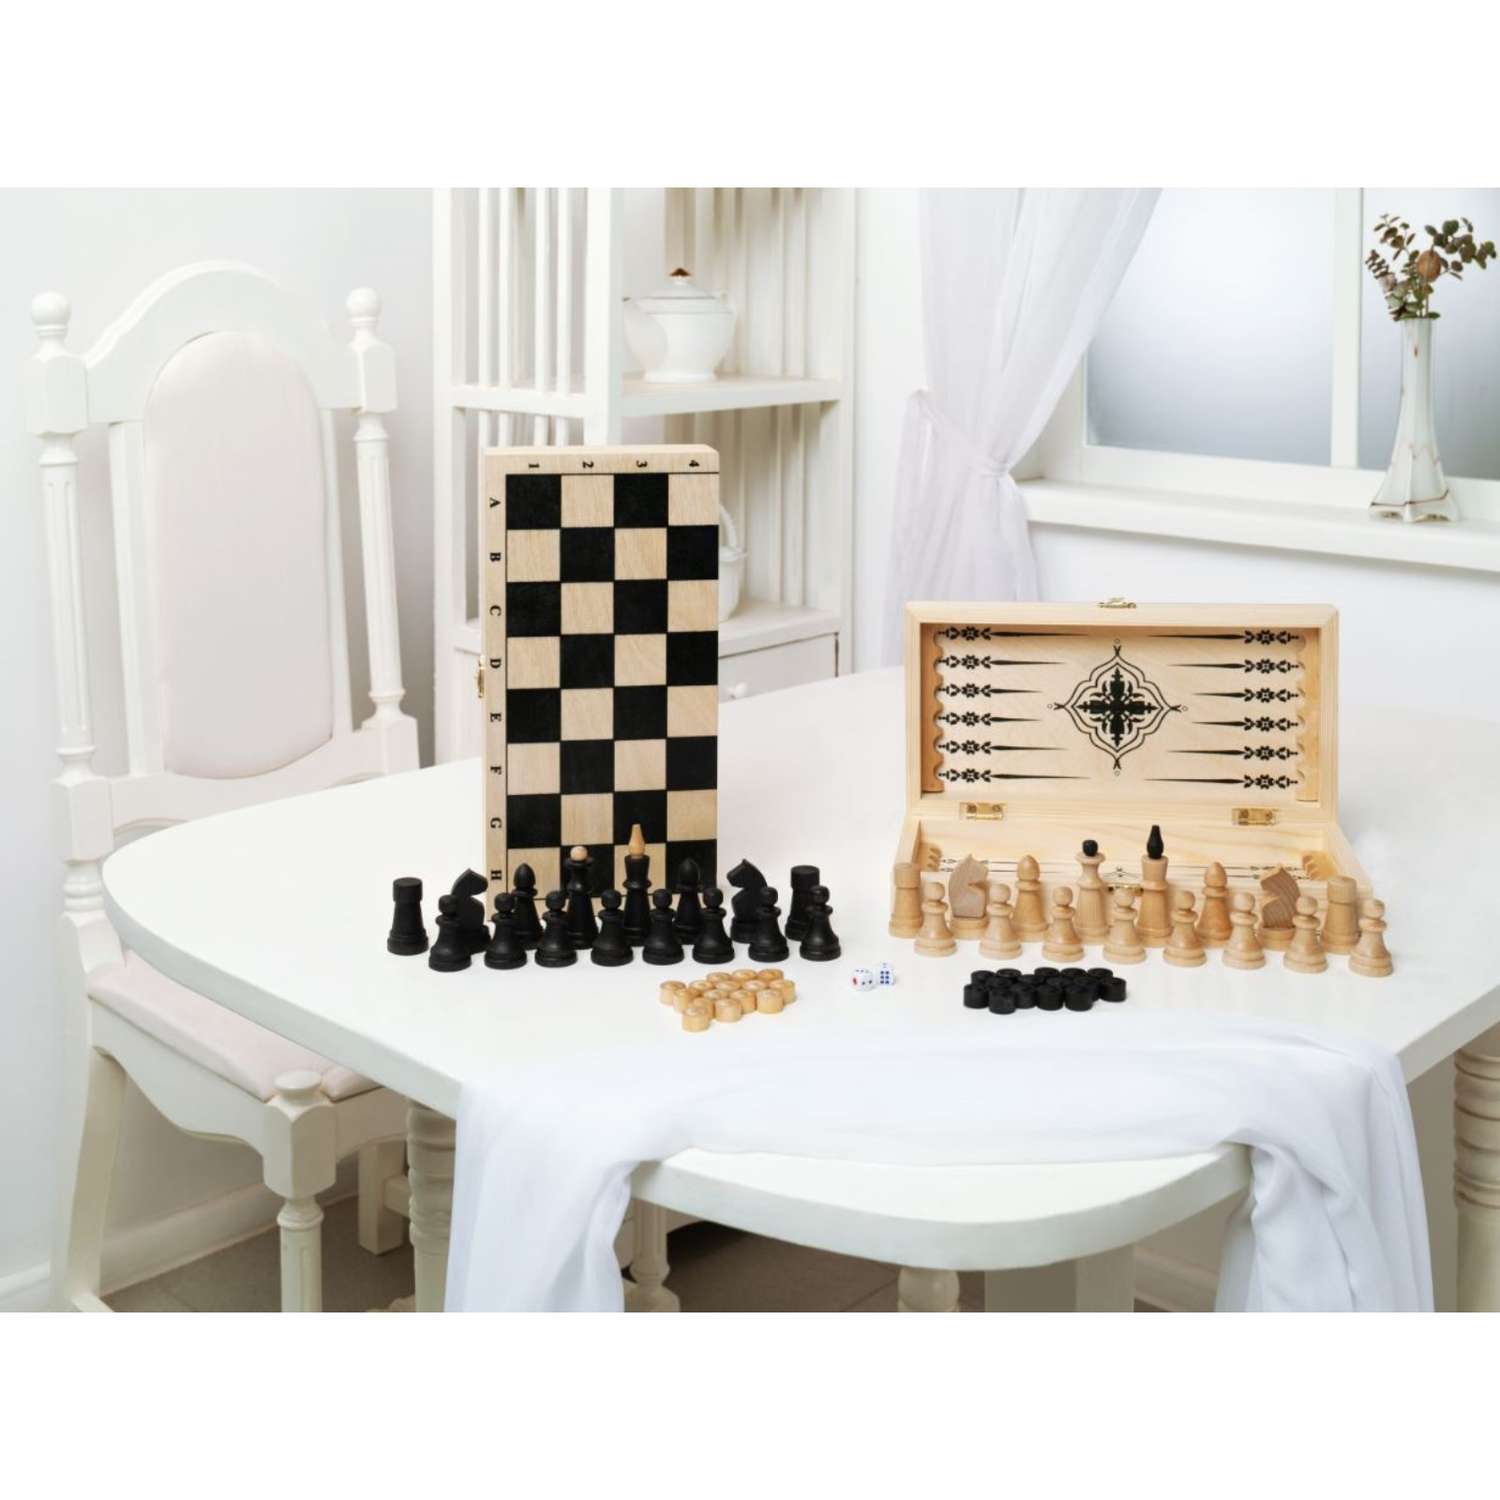 Настольная игра Sima-Land 3 в 1 «Классика» нарды шашки шахматы доска 29 х 29 х 3 см - фото 2